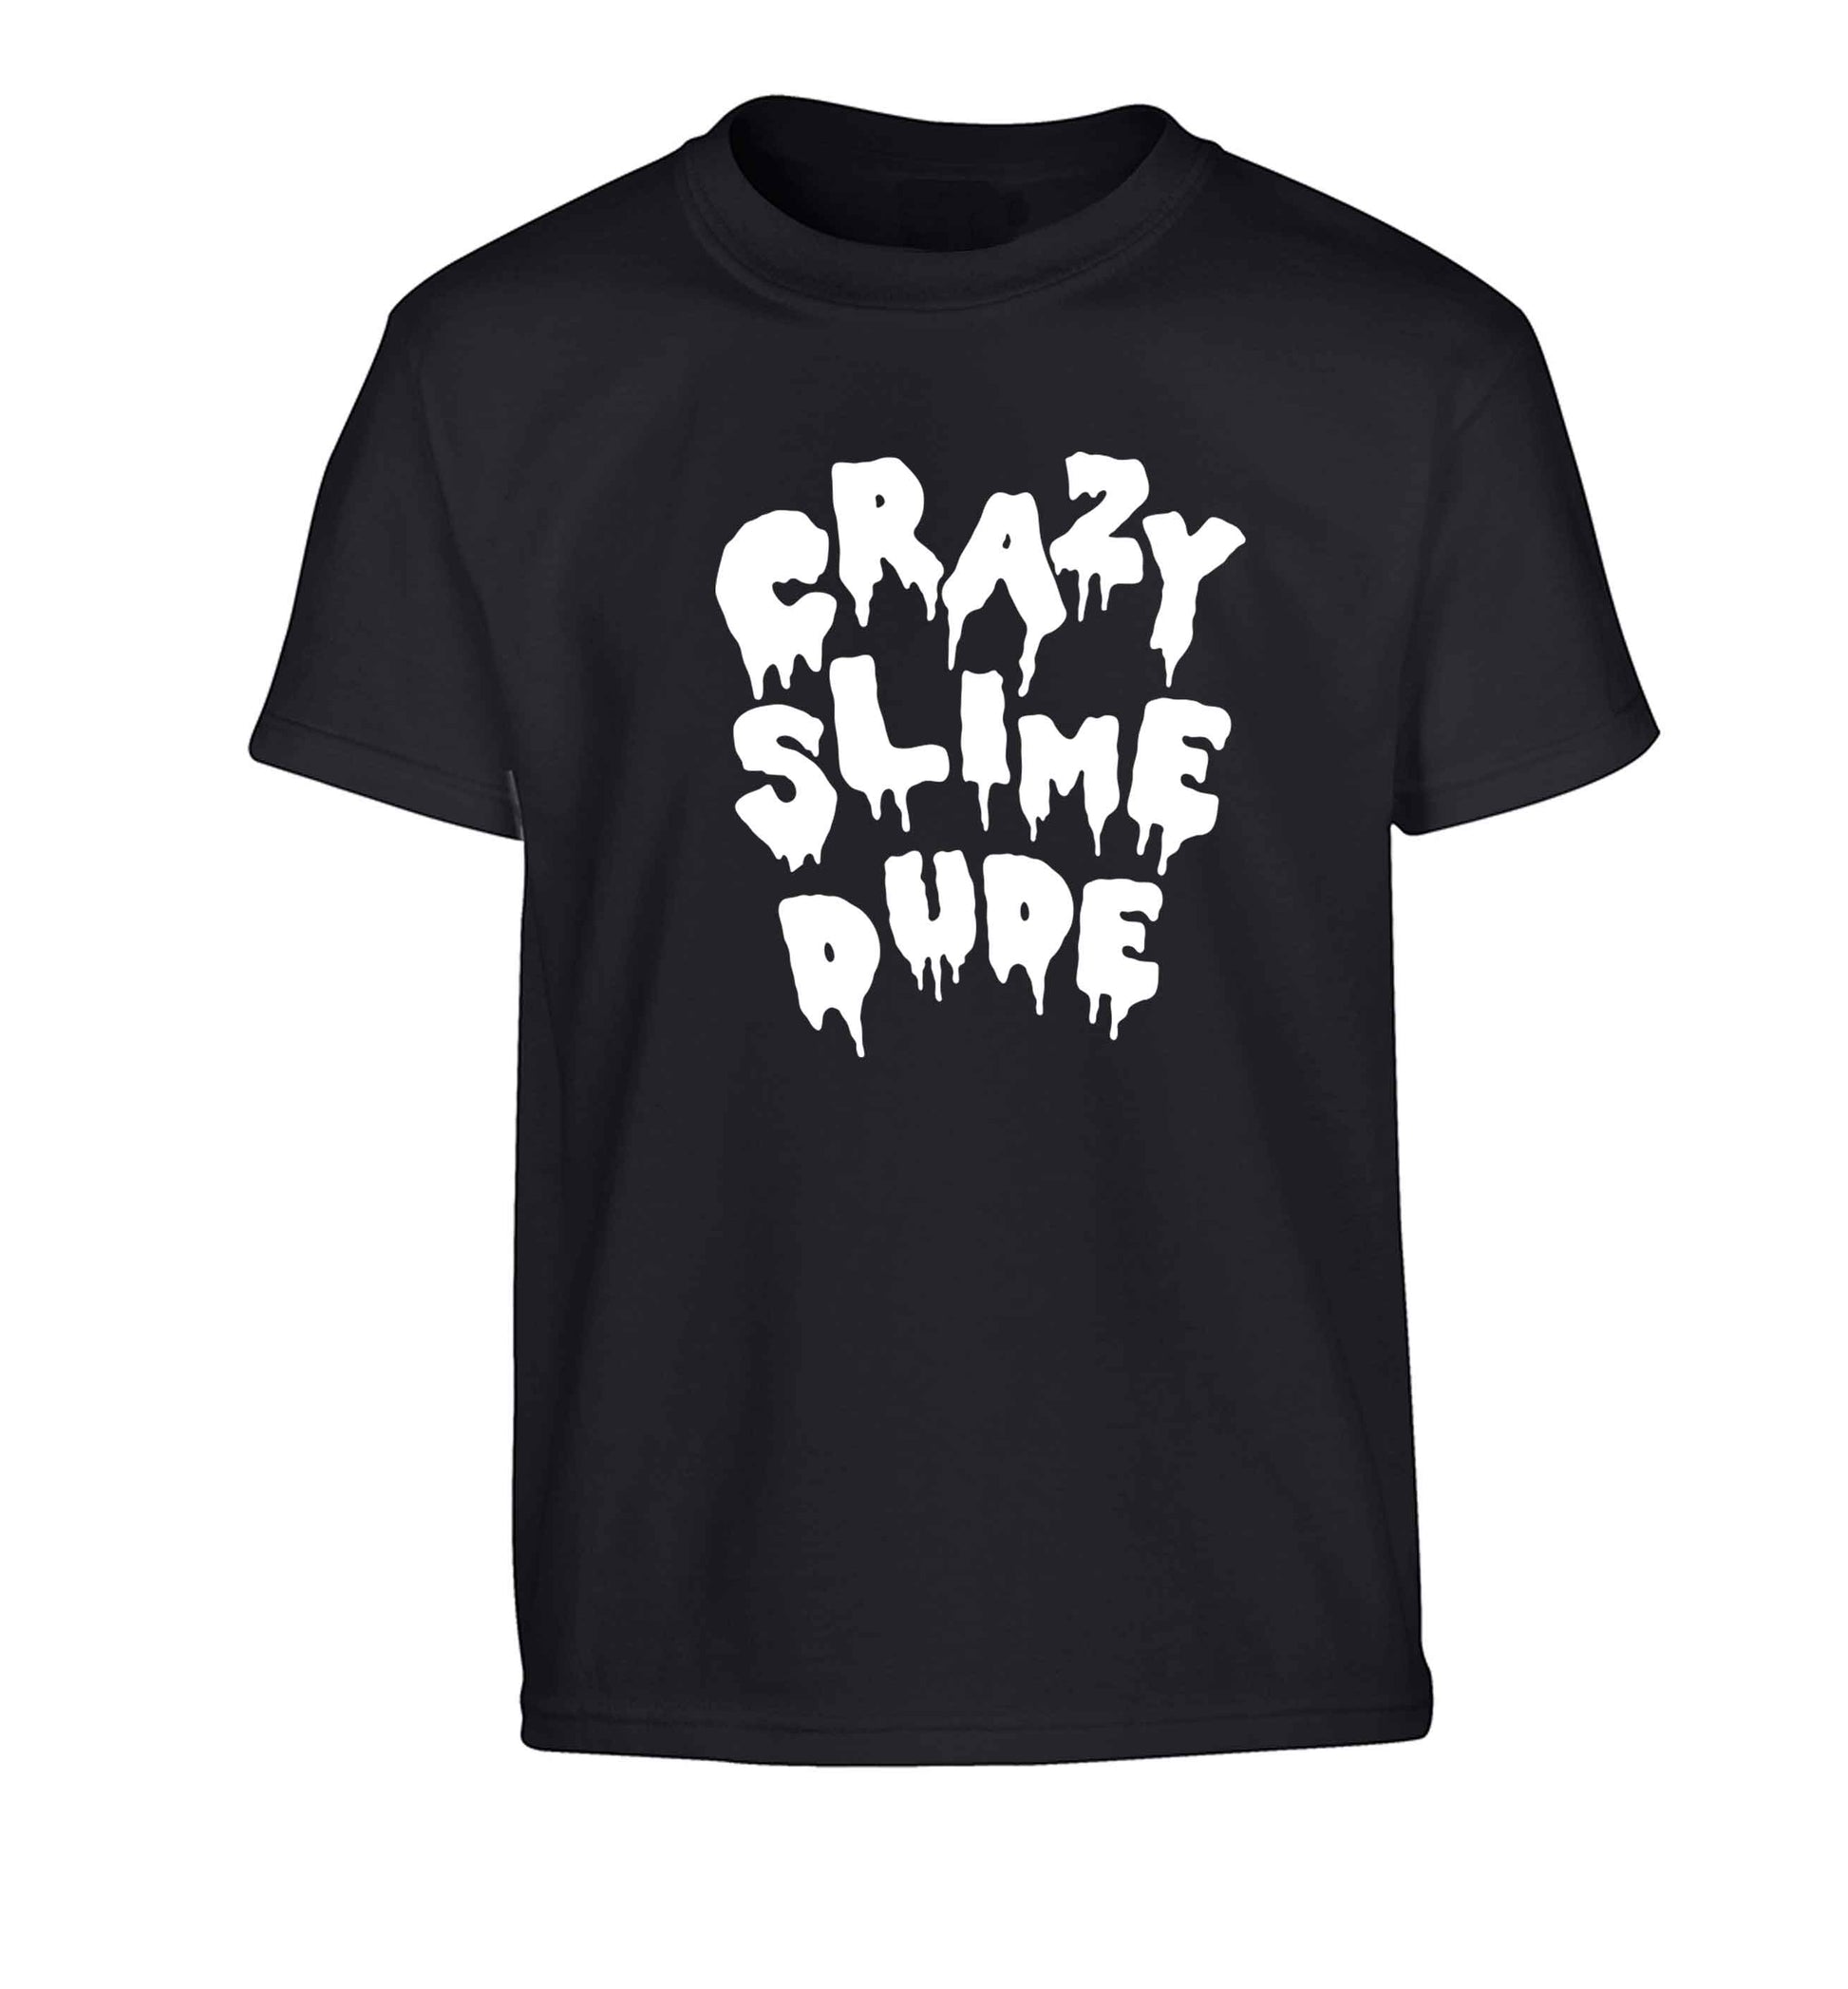 Crazy slime dude Children's black Tshirt 12-13 Years